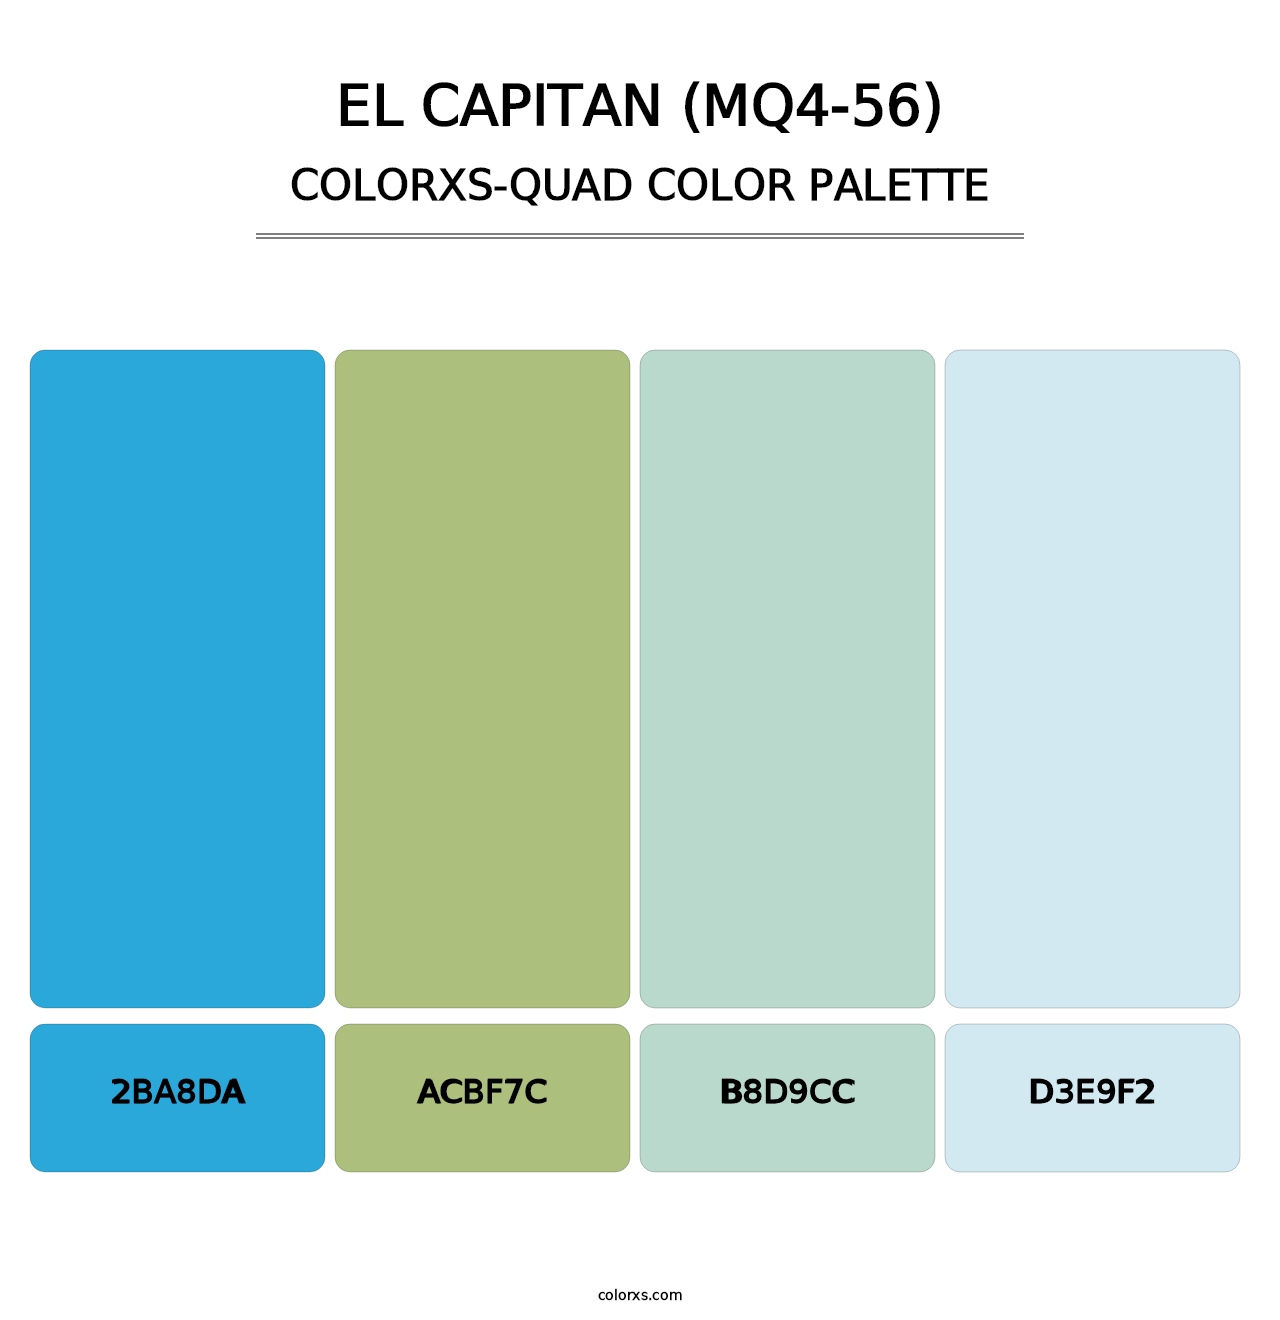 El Capitan (MQ4-56) - Colorxs Quad Palette